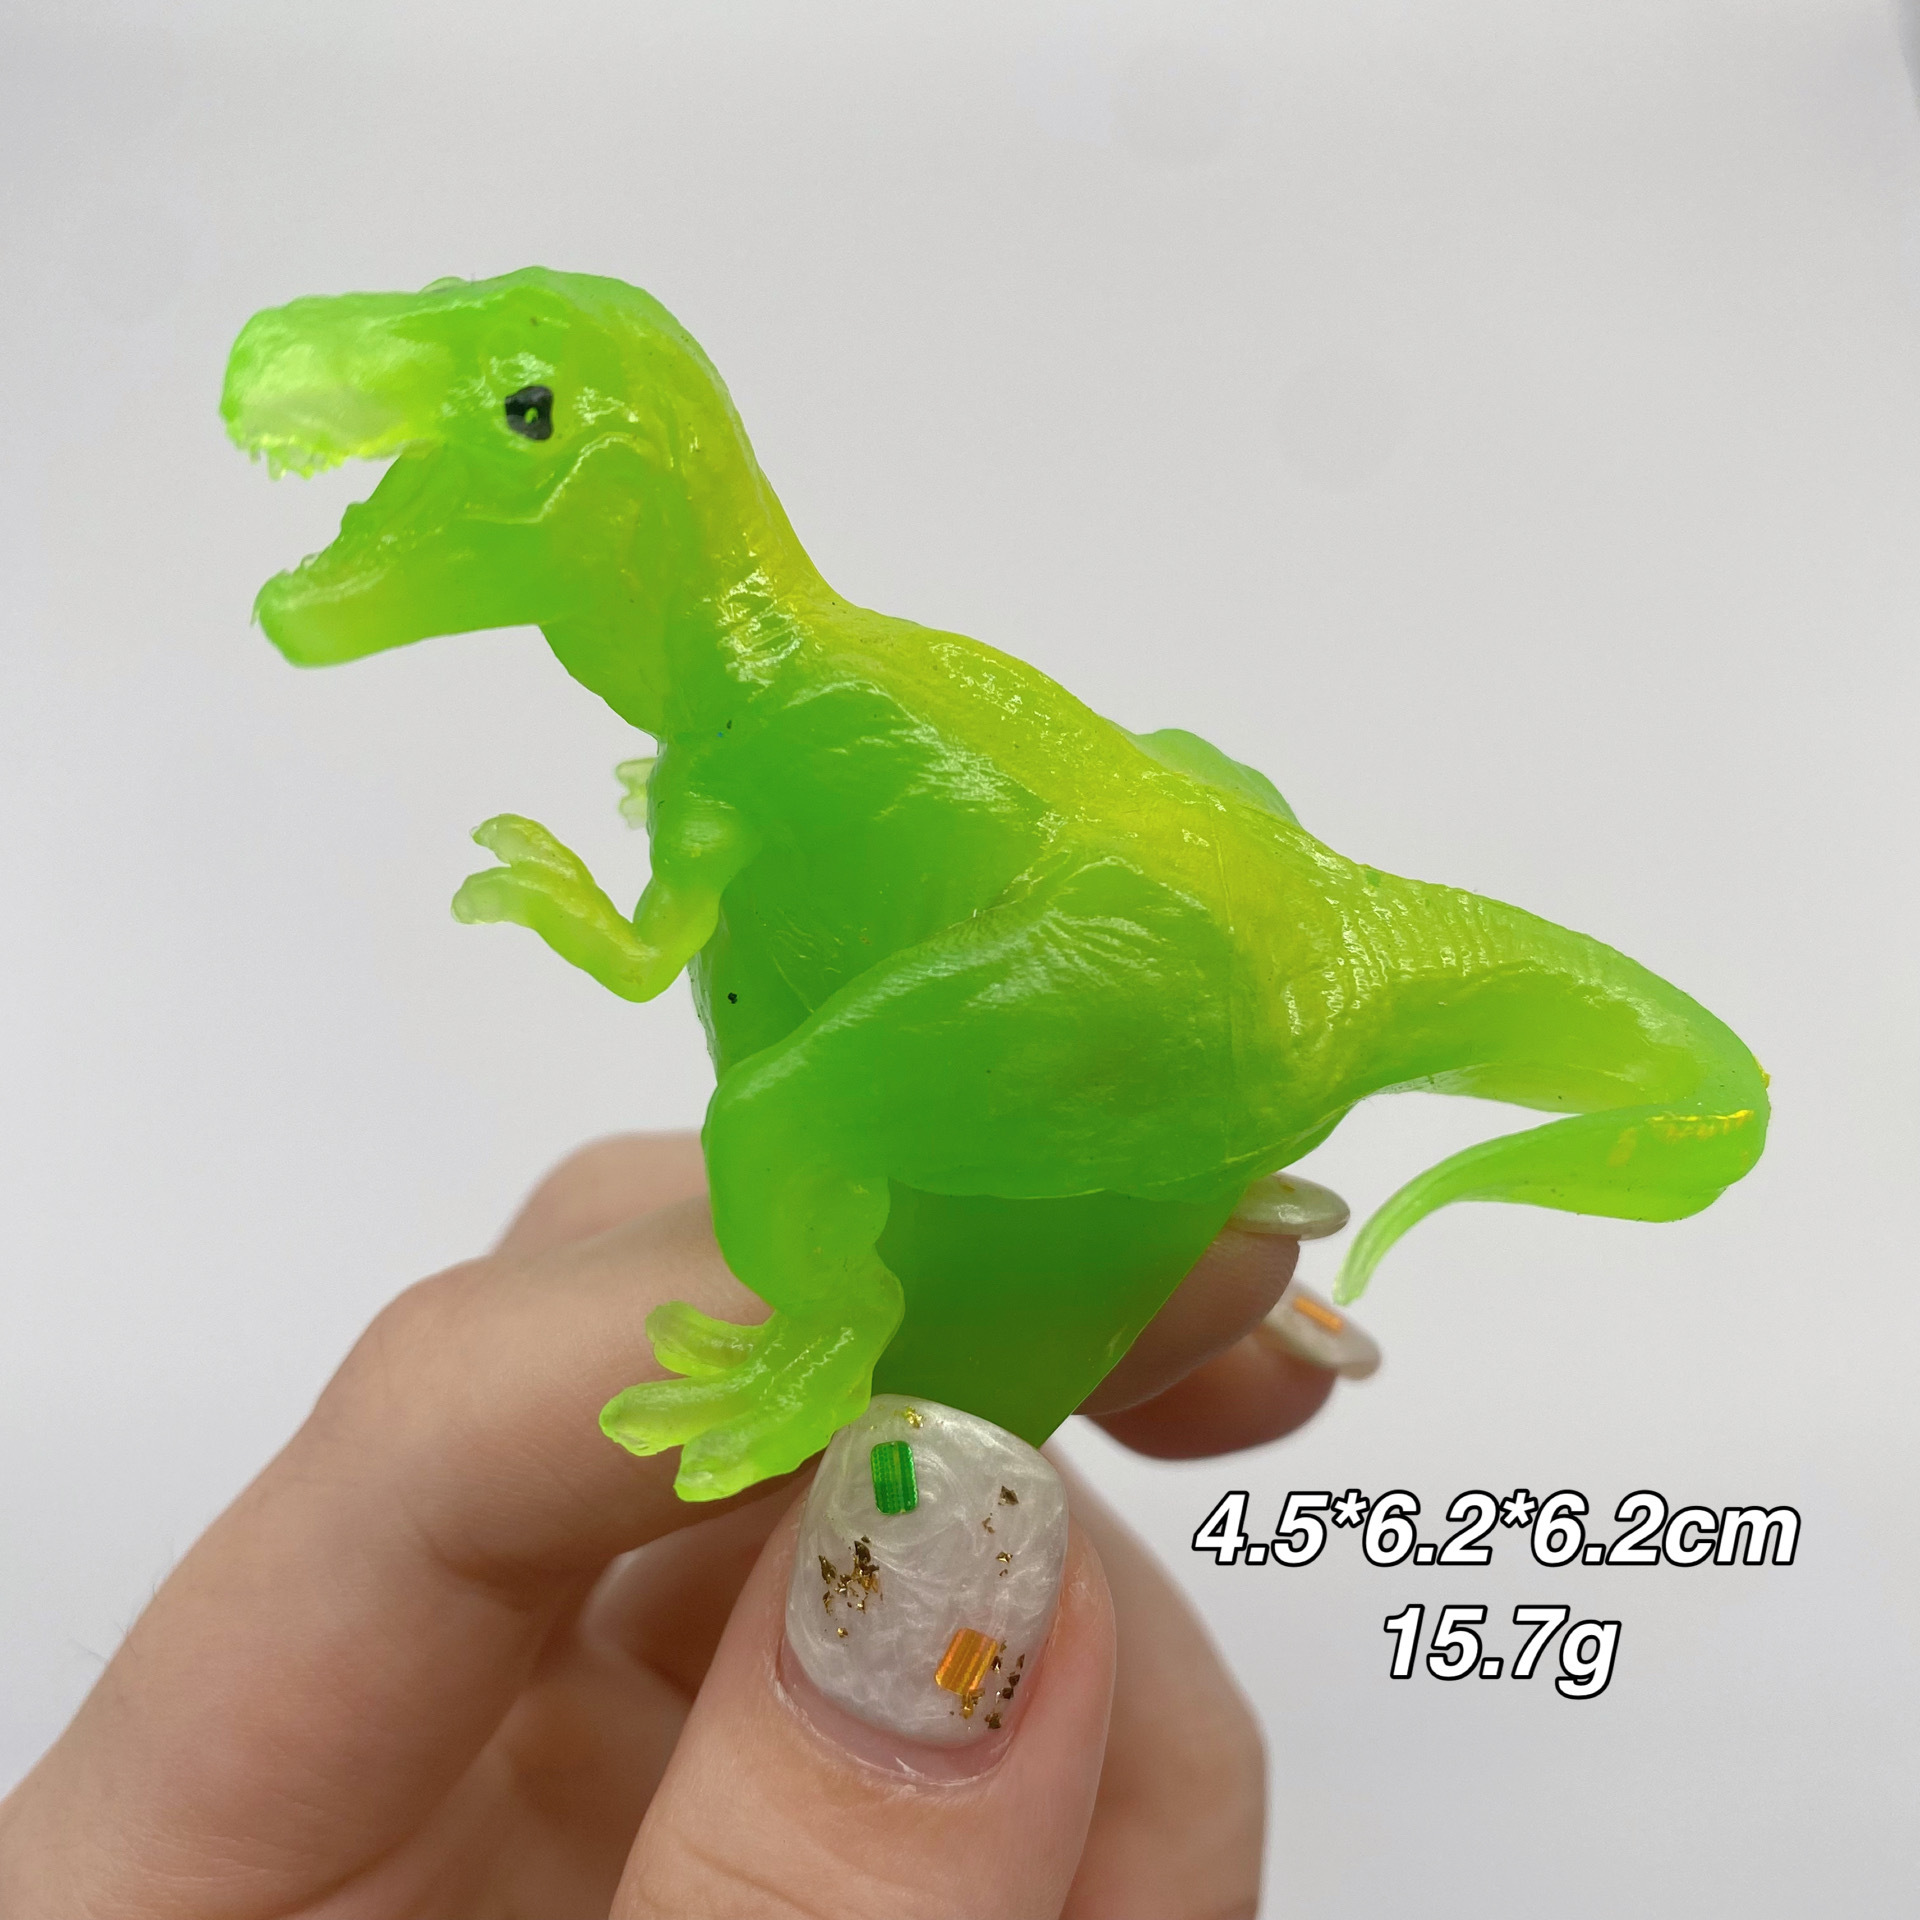 New Dinosaur Ring Led for Amazon Hot Sale Luminous Dinosaur Ring Kids Toy Party Gathering Ring